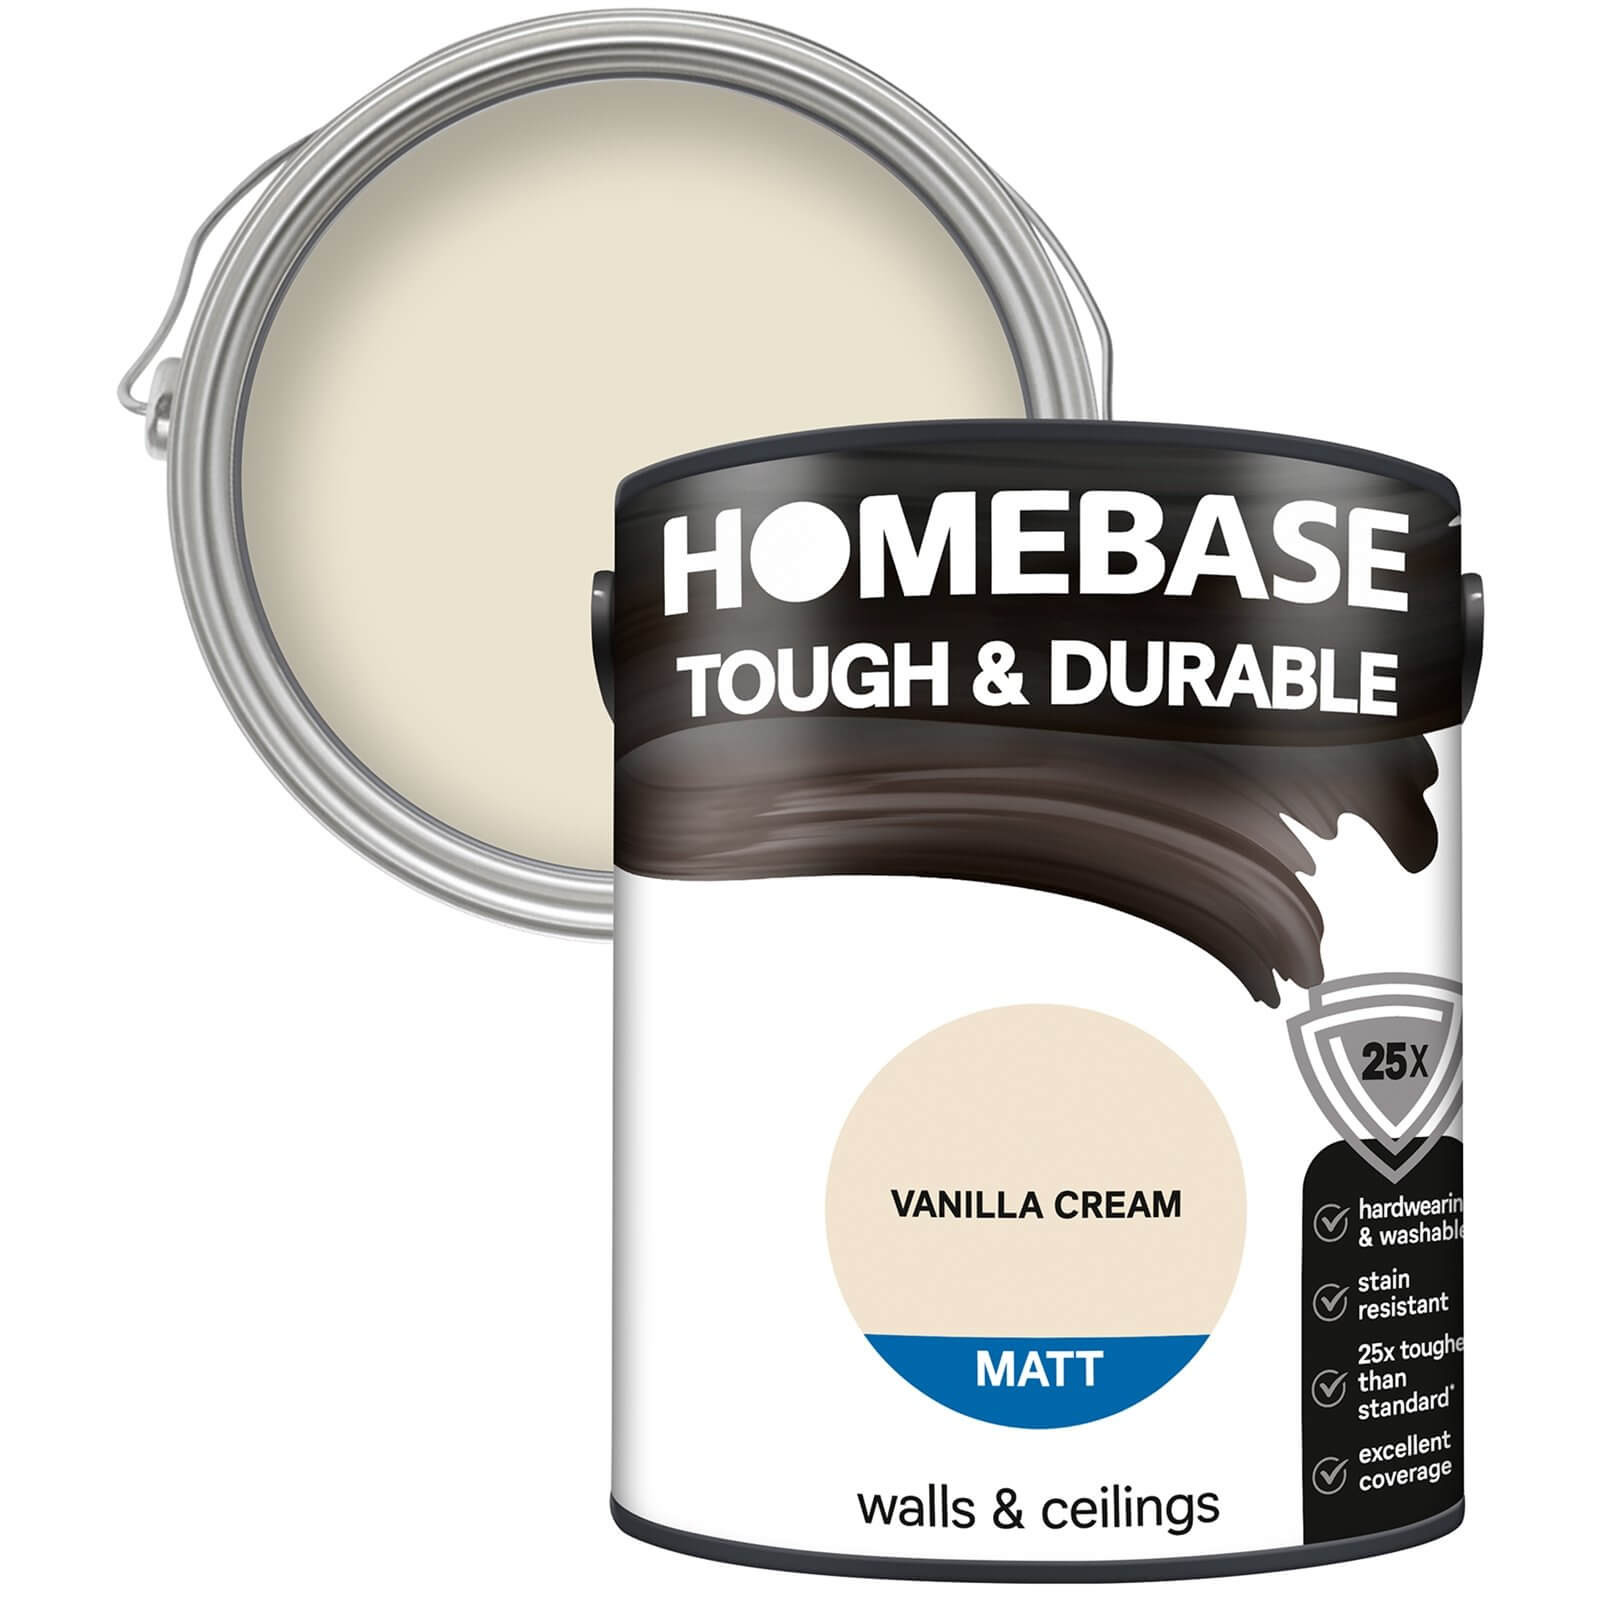 Homebase Tough & Durable Matt Paint Vanilla Cream - 5L